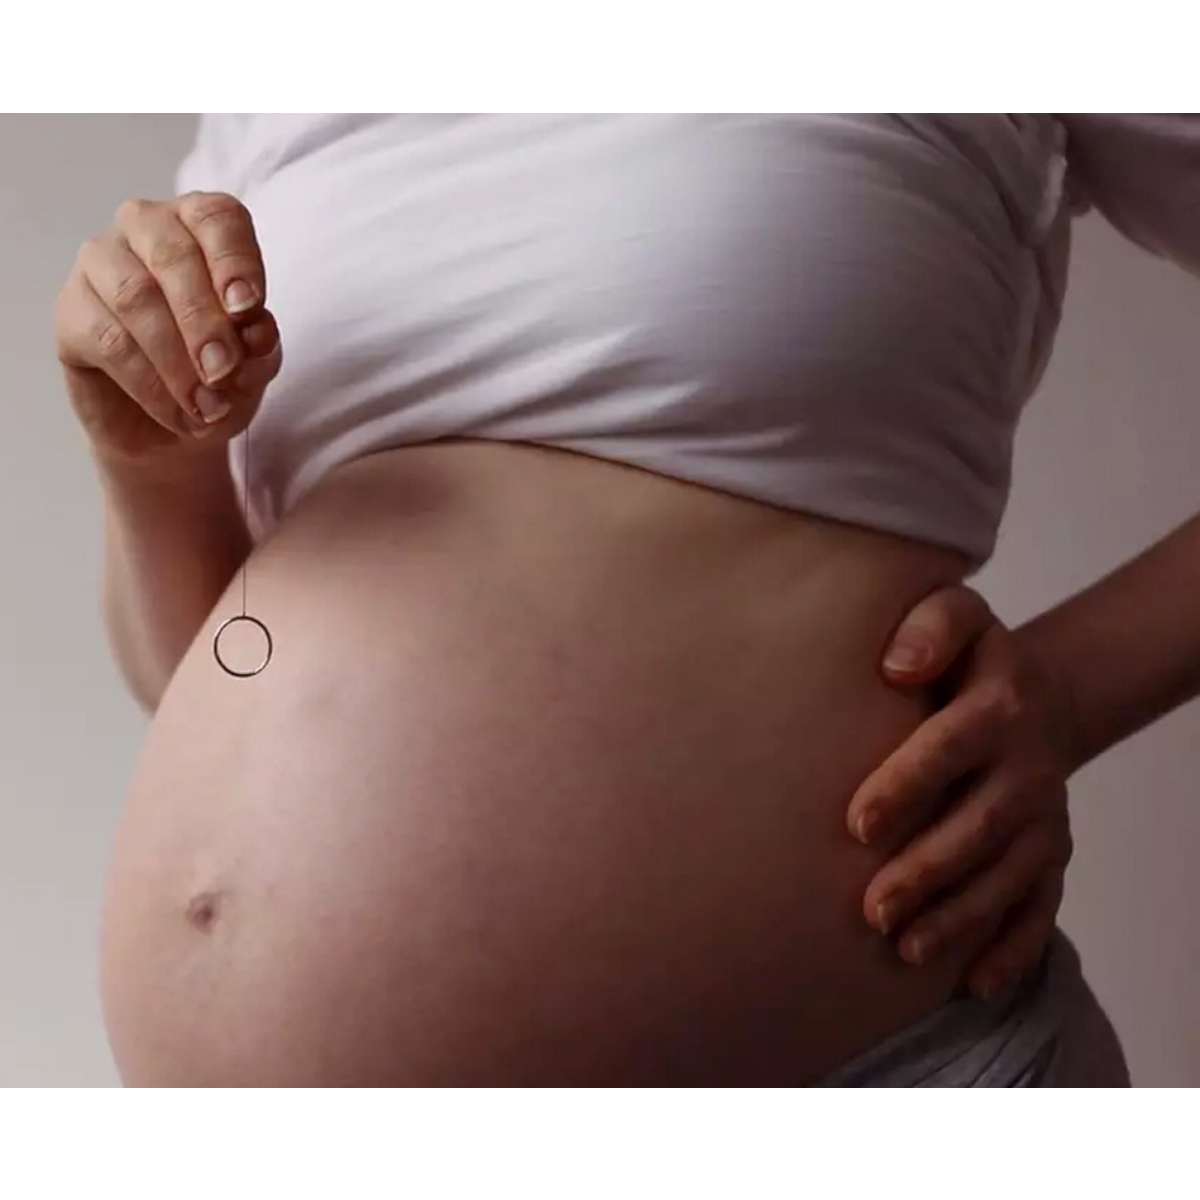 Nina Ross's ‘Untitled #1, Pregnancy’